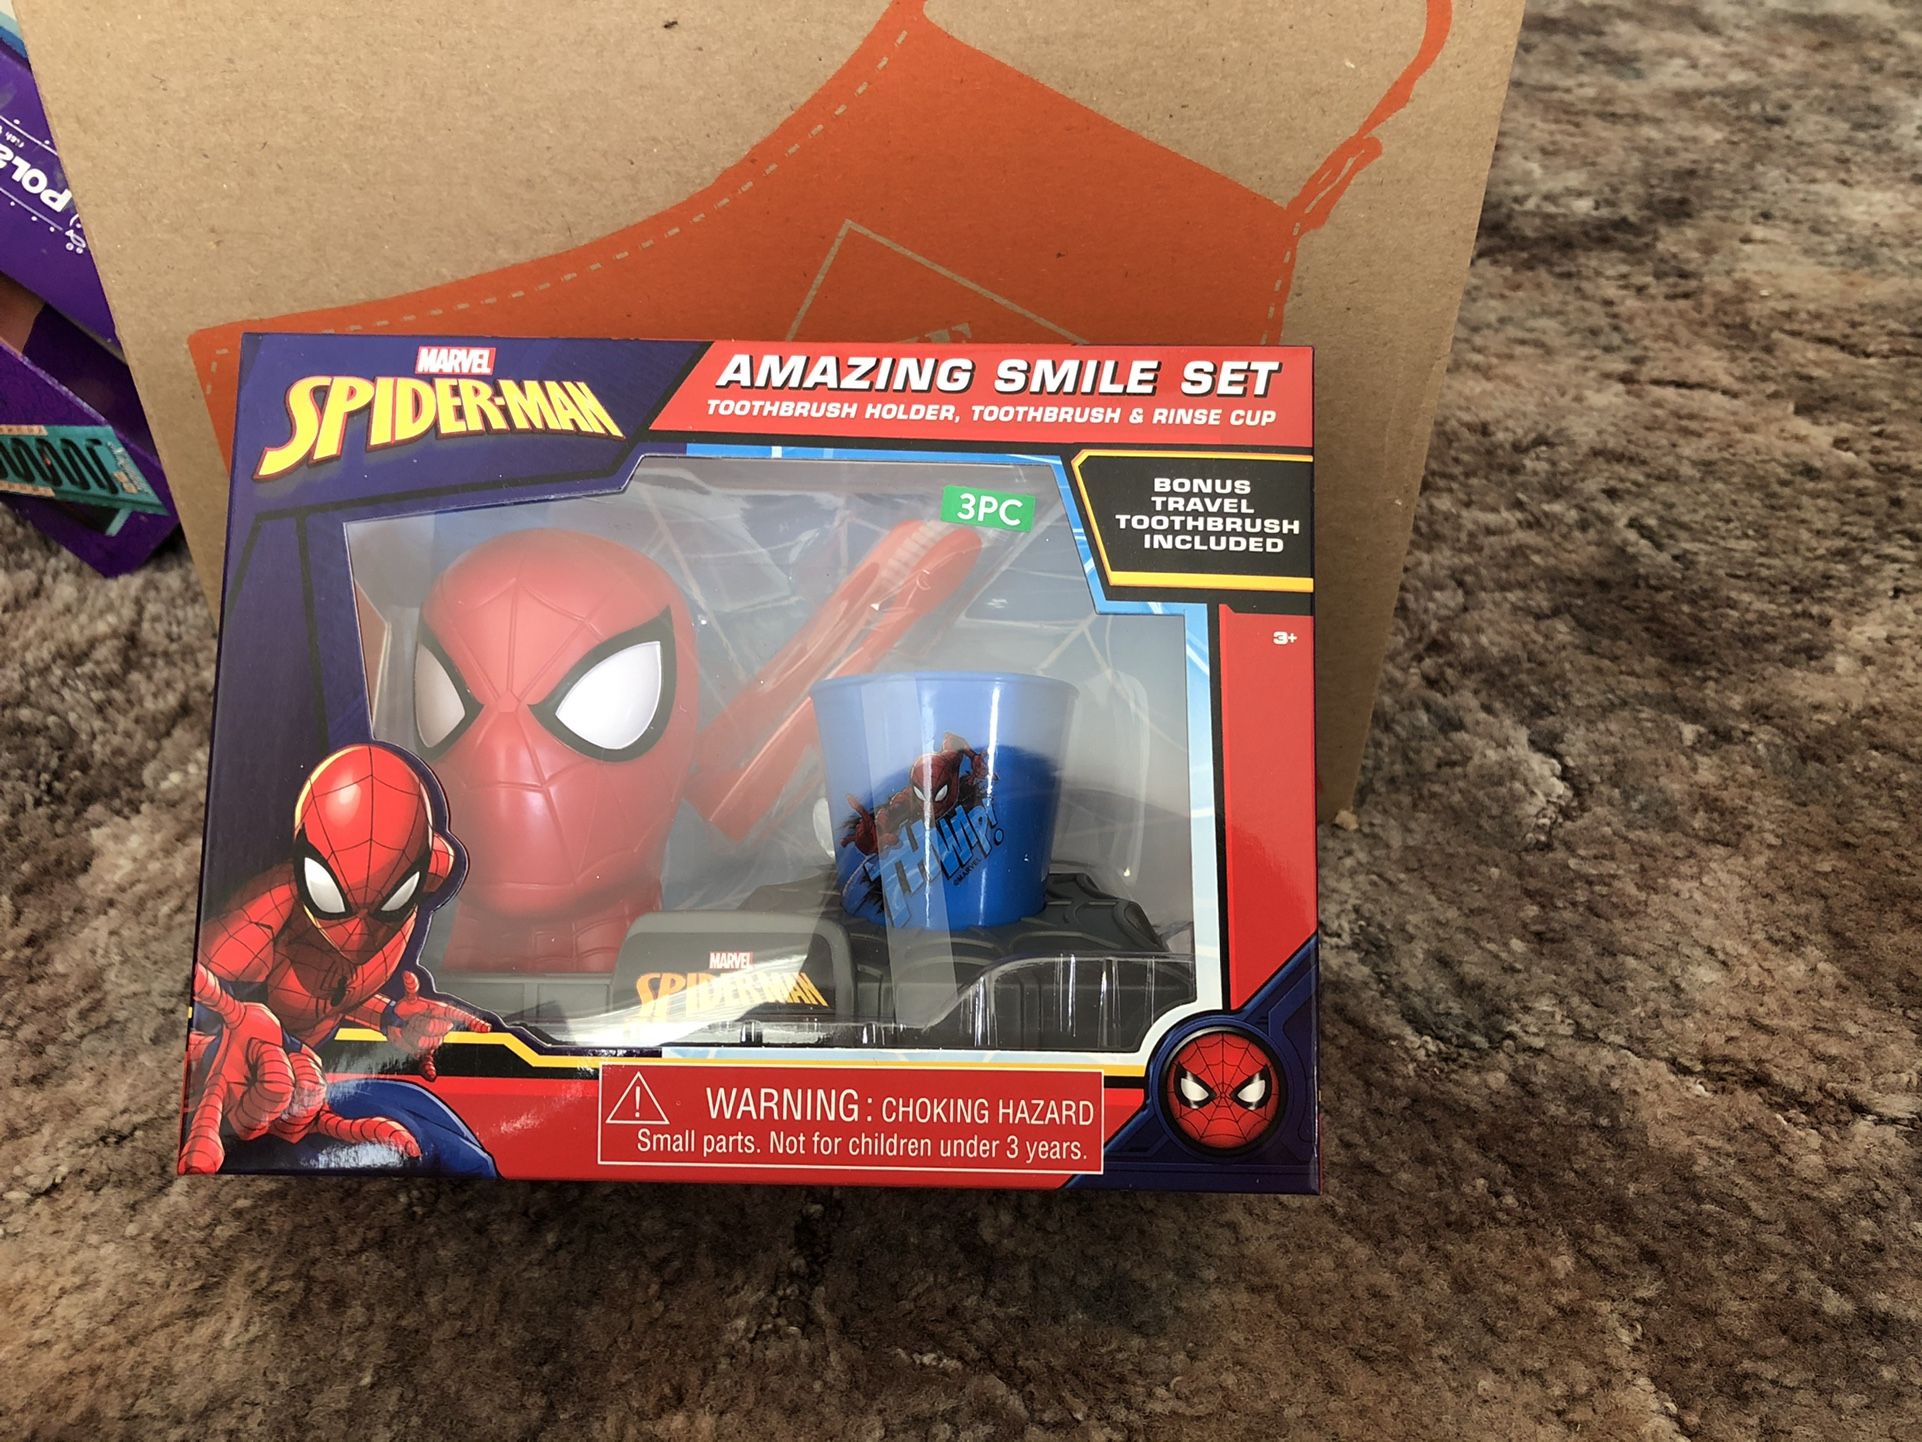 Spider-Man Smile Kit